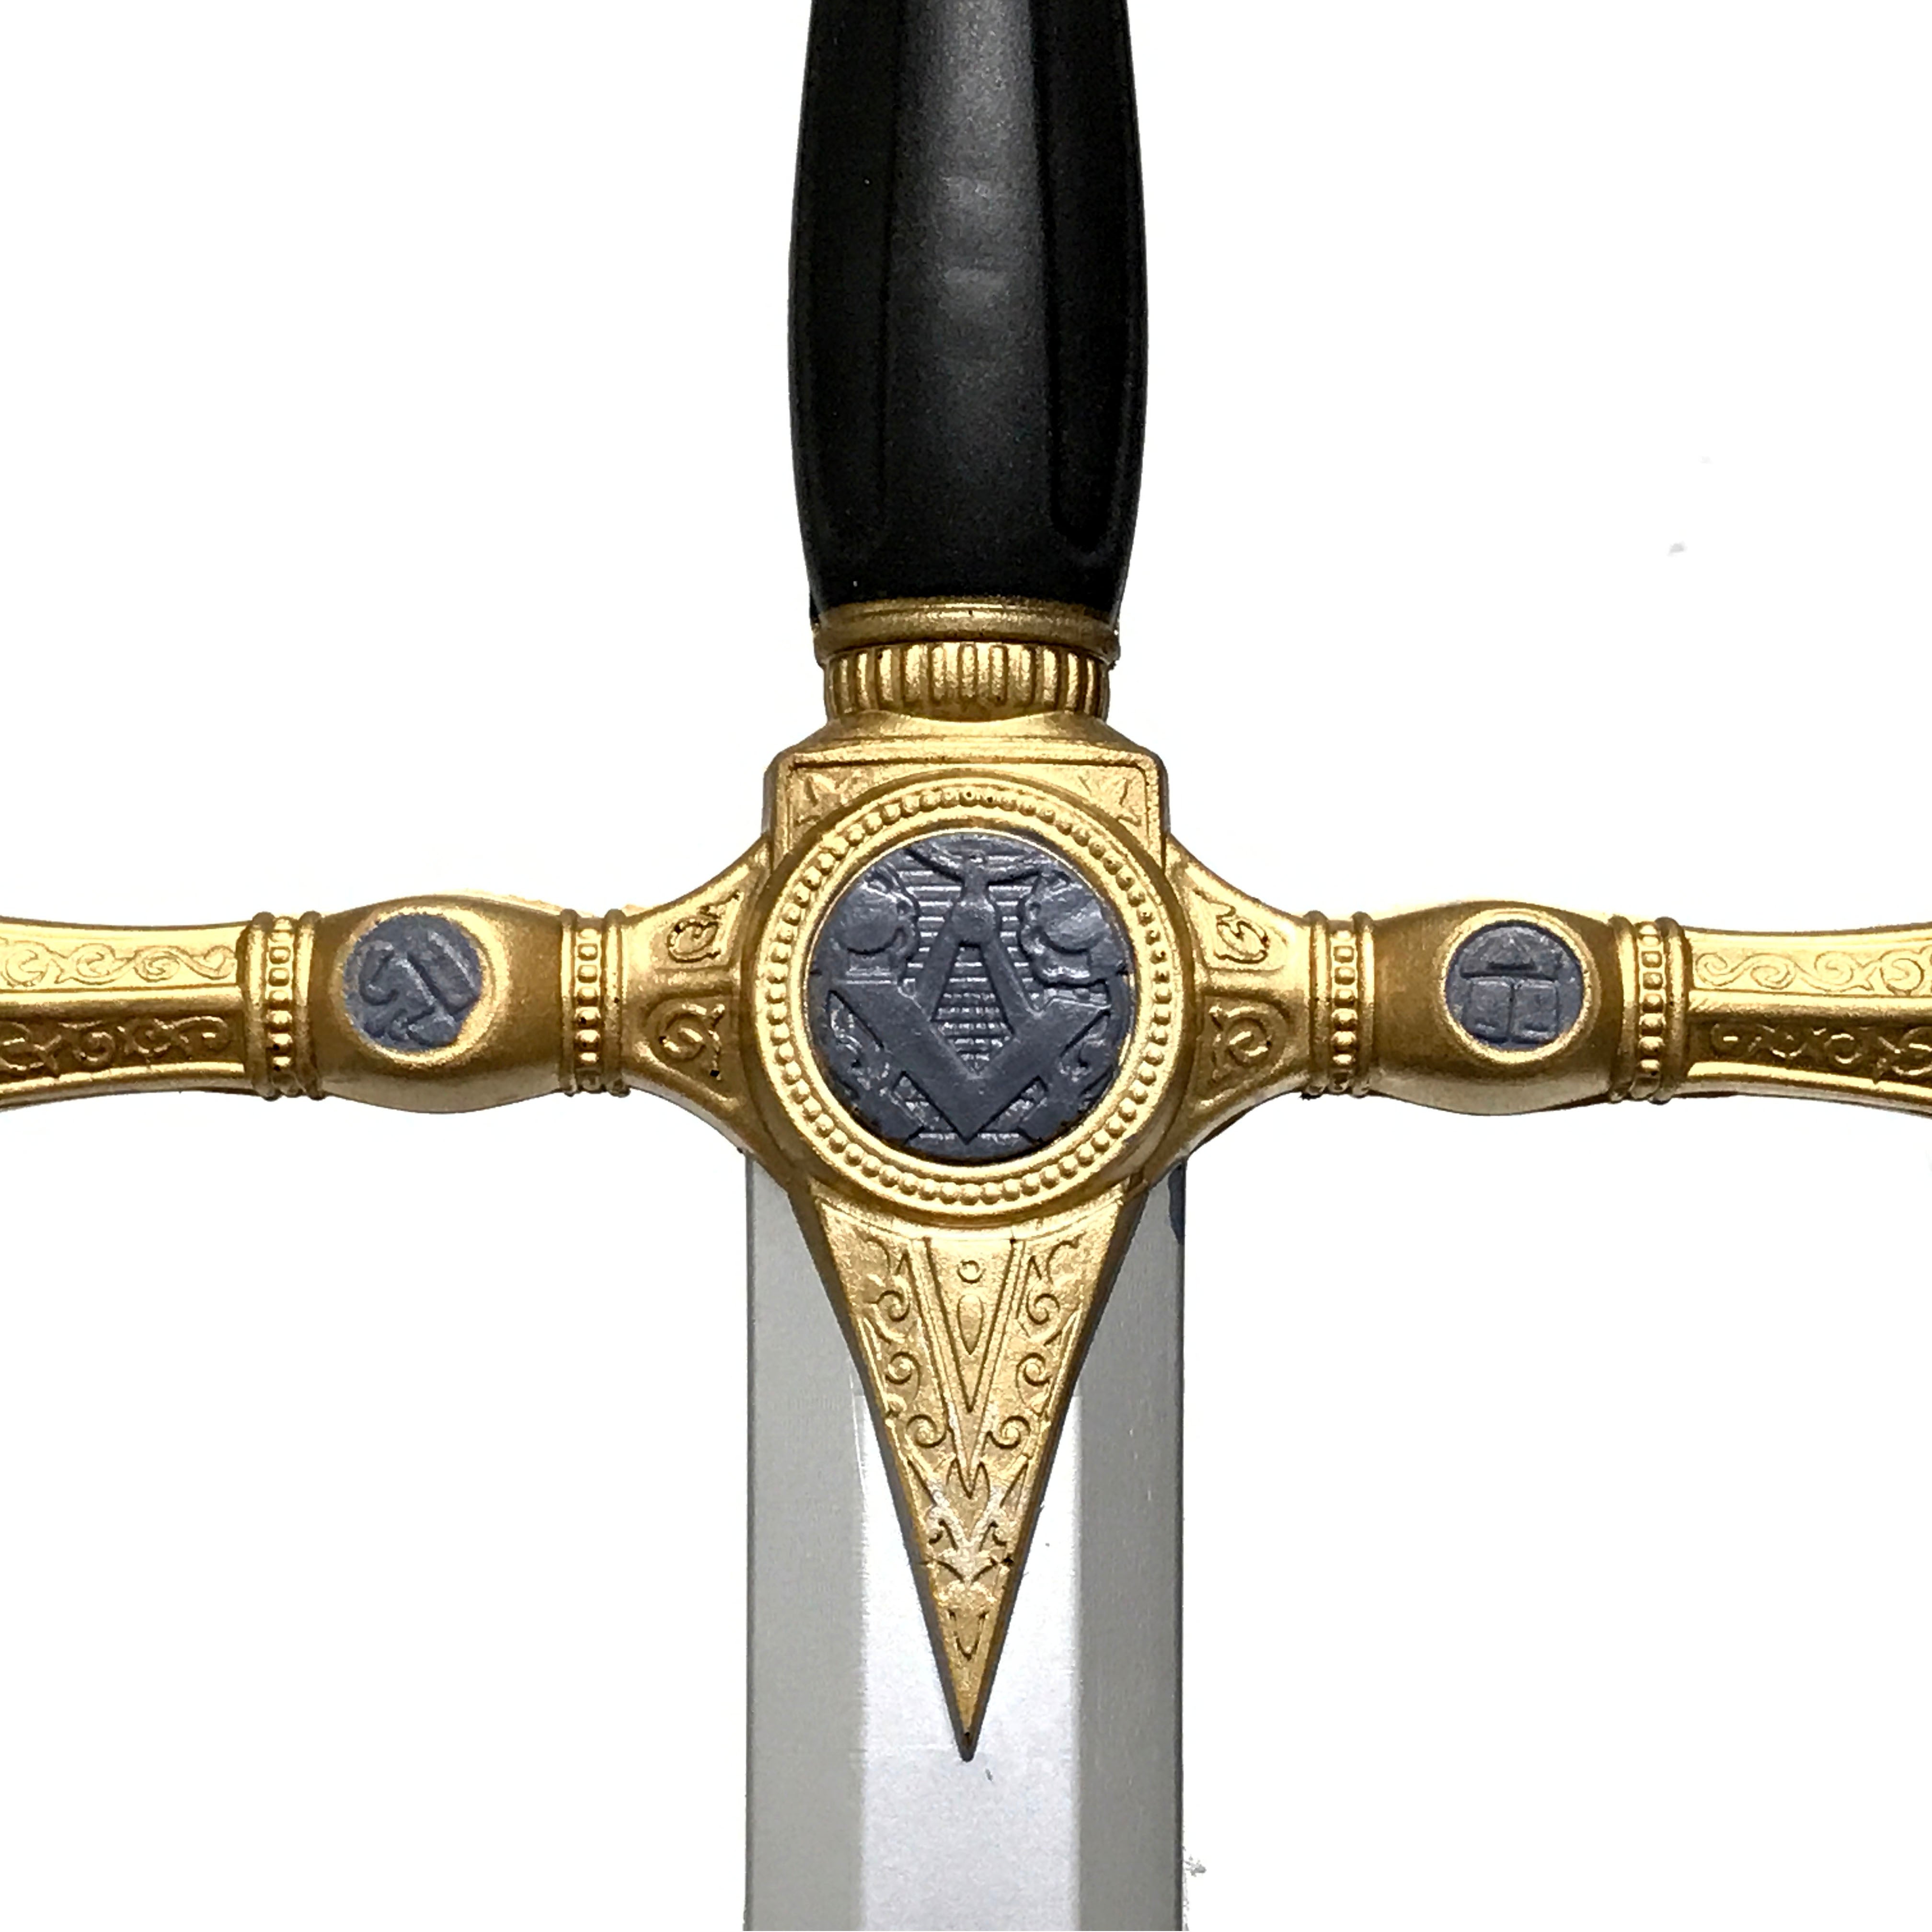 Masonic Arming Sword Urethane Foam with Fiberglass Core - Flexible 45 Inch Cosplay LARP Action Prop